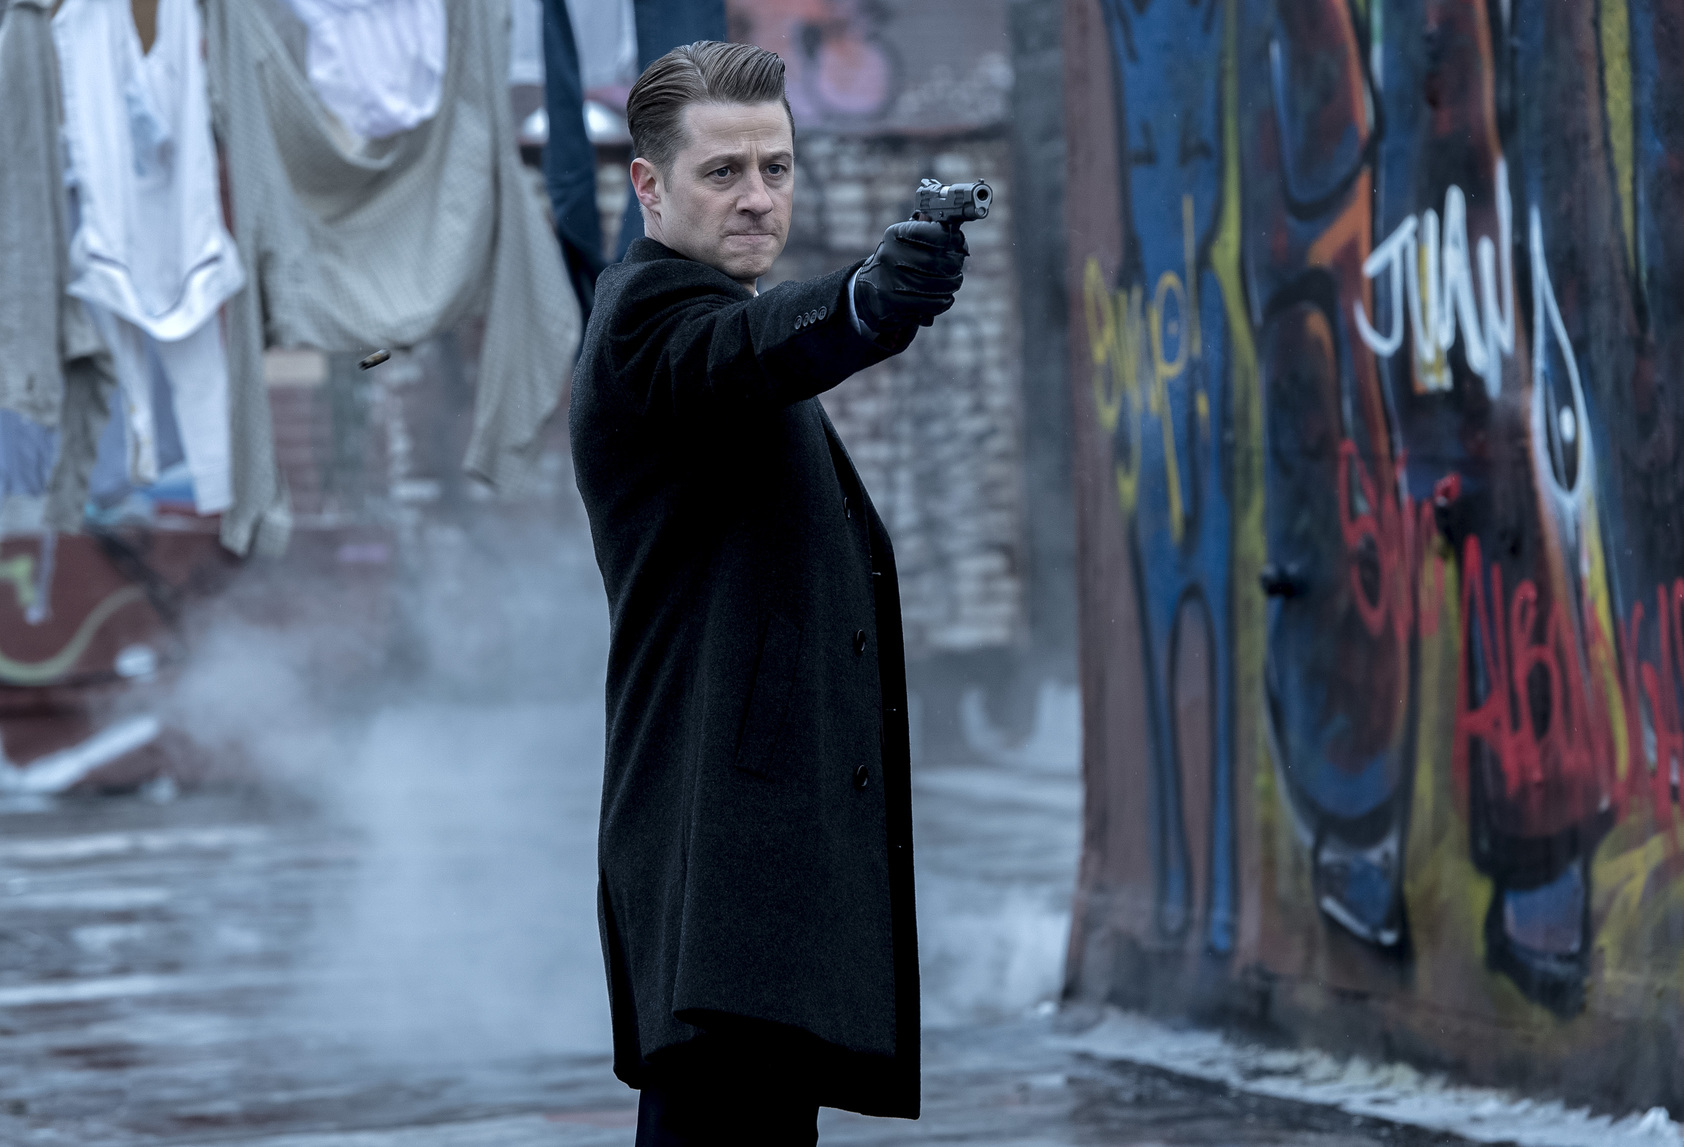 Gotham TV Show on FOX: canceled or renewed?